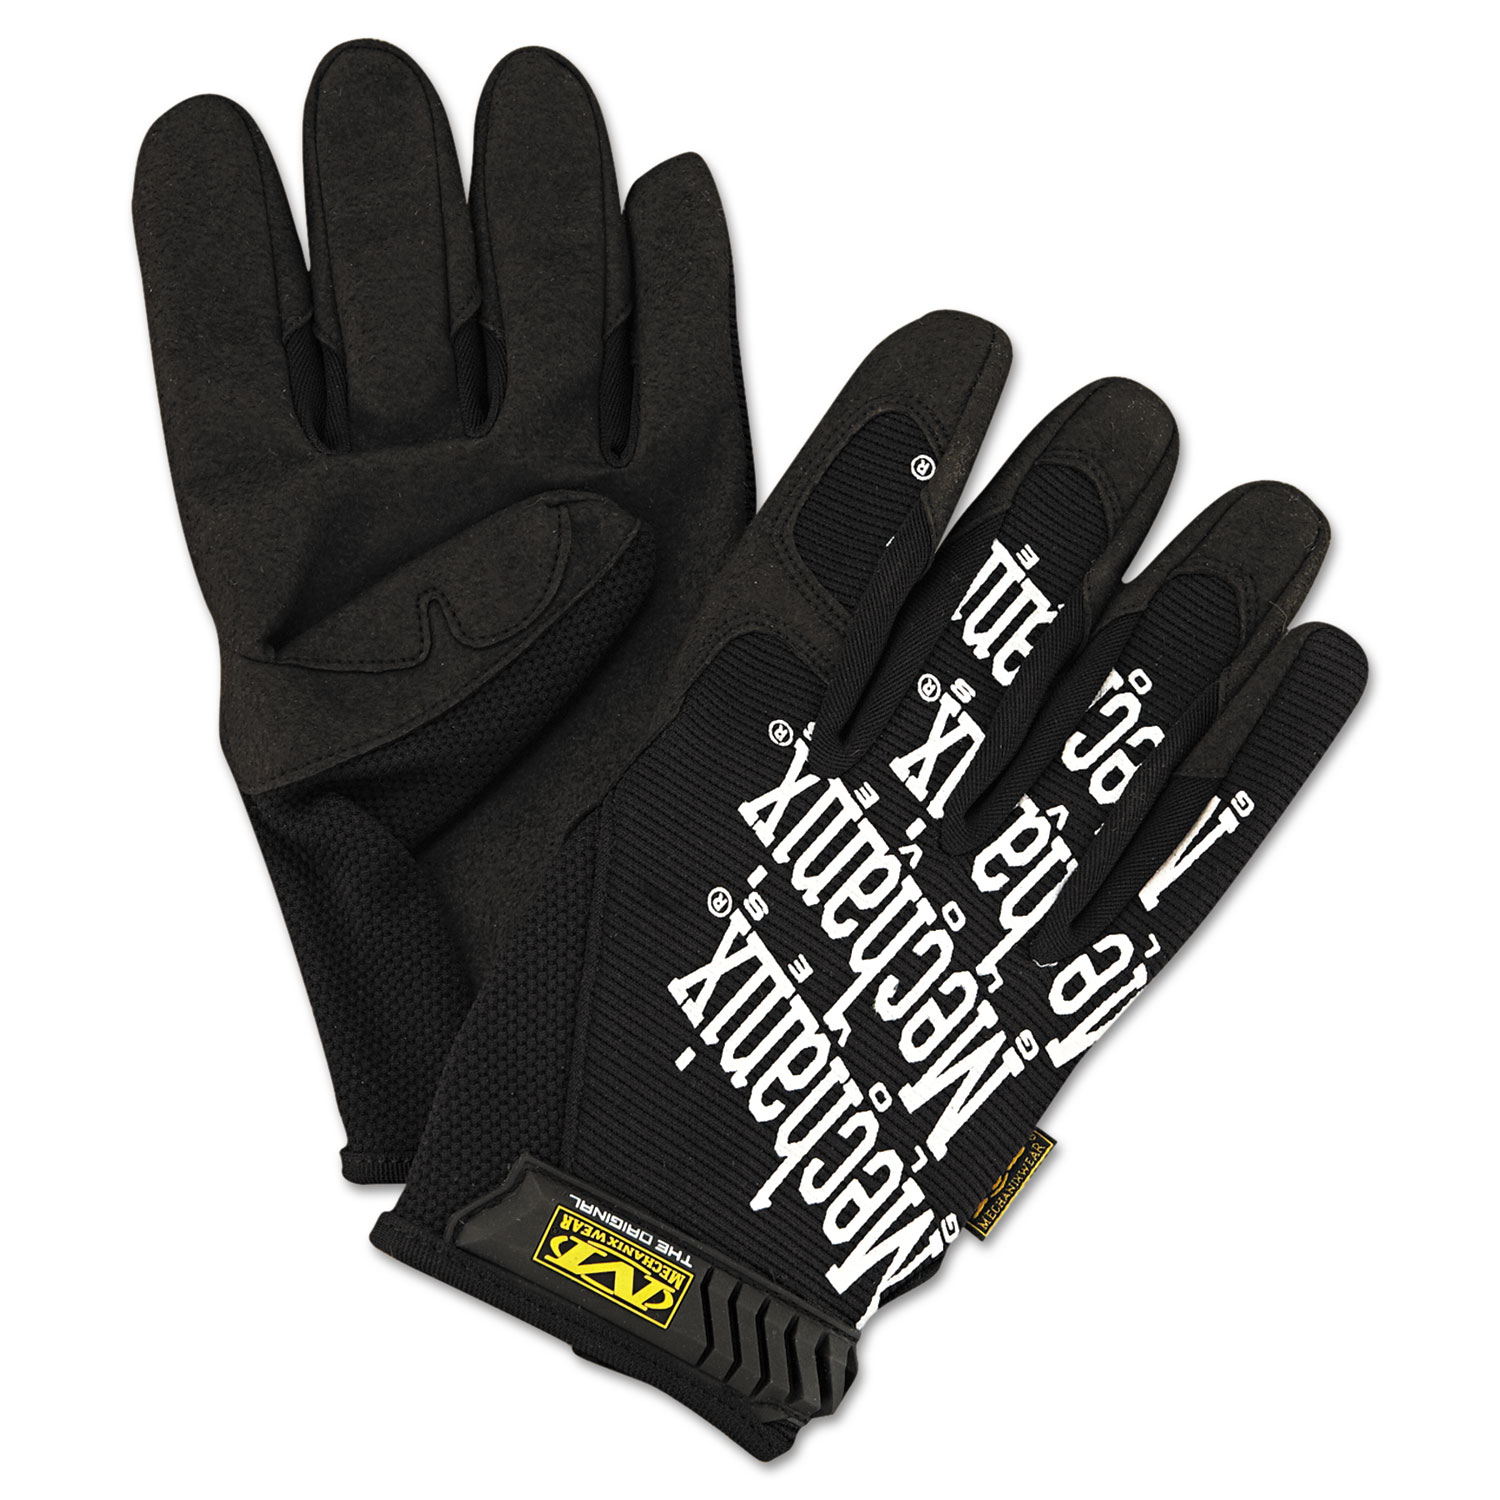  Mechanix Wear MG-05-011 The Original Work Gloves, Black, X-Large (MNXMG05011) 